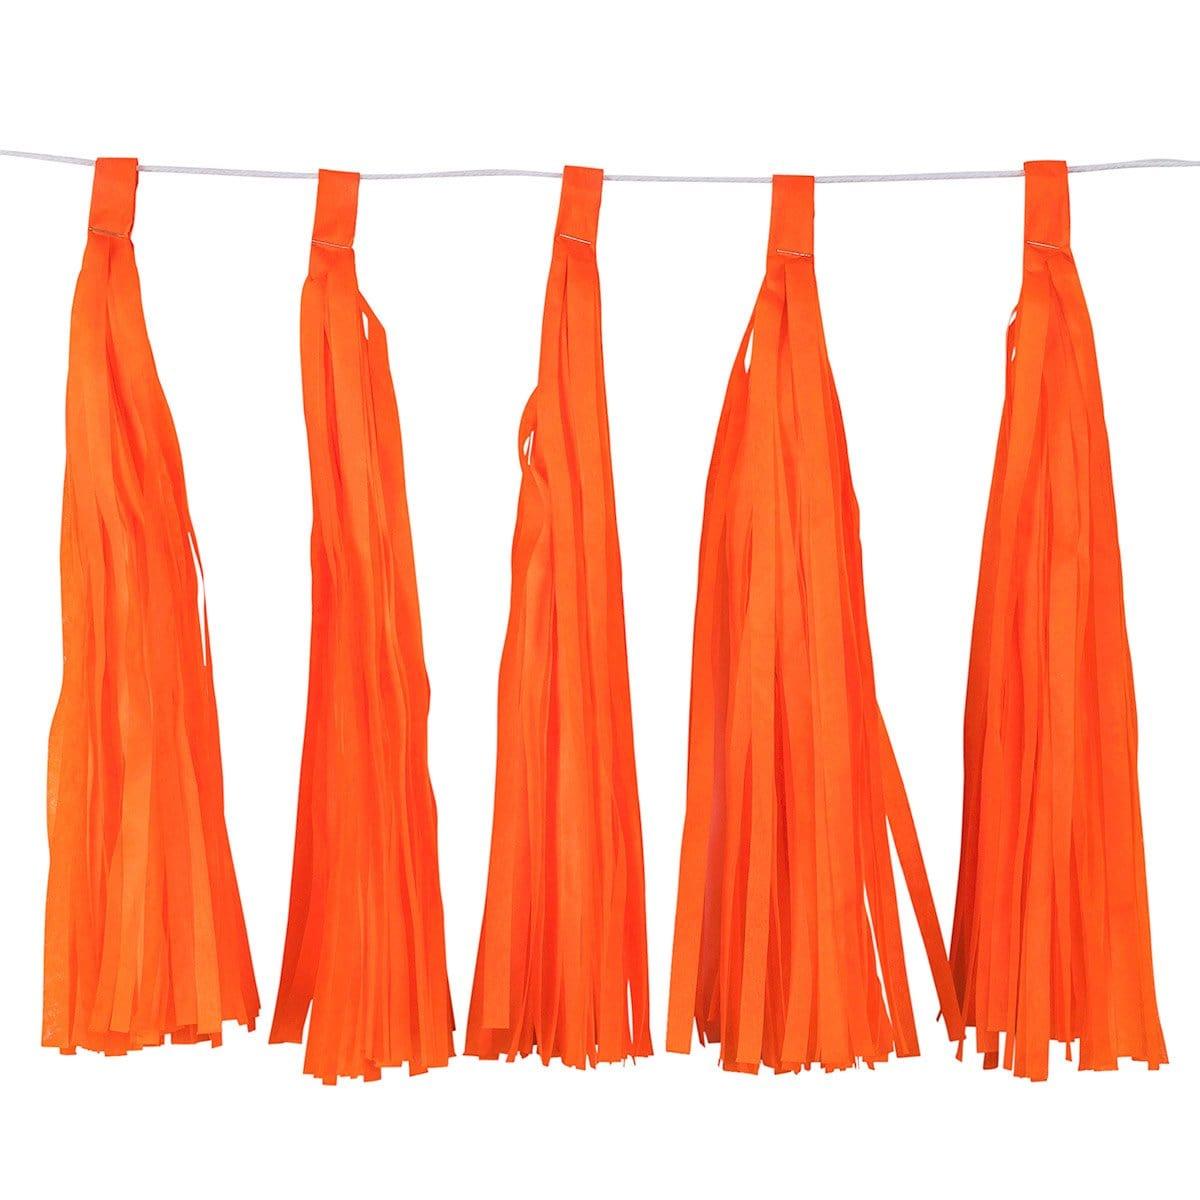 Buy Decorations Tassels Garland Silk Paper Assembled 10/Pkg - Orange sold at Party Expert